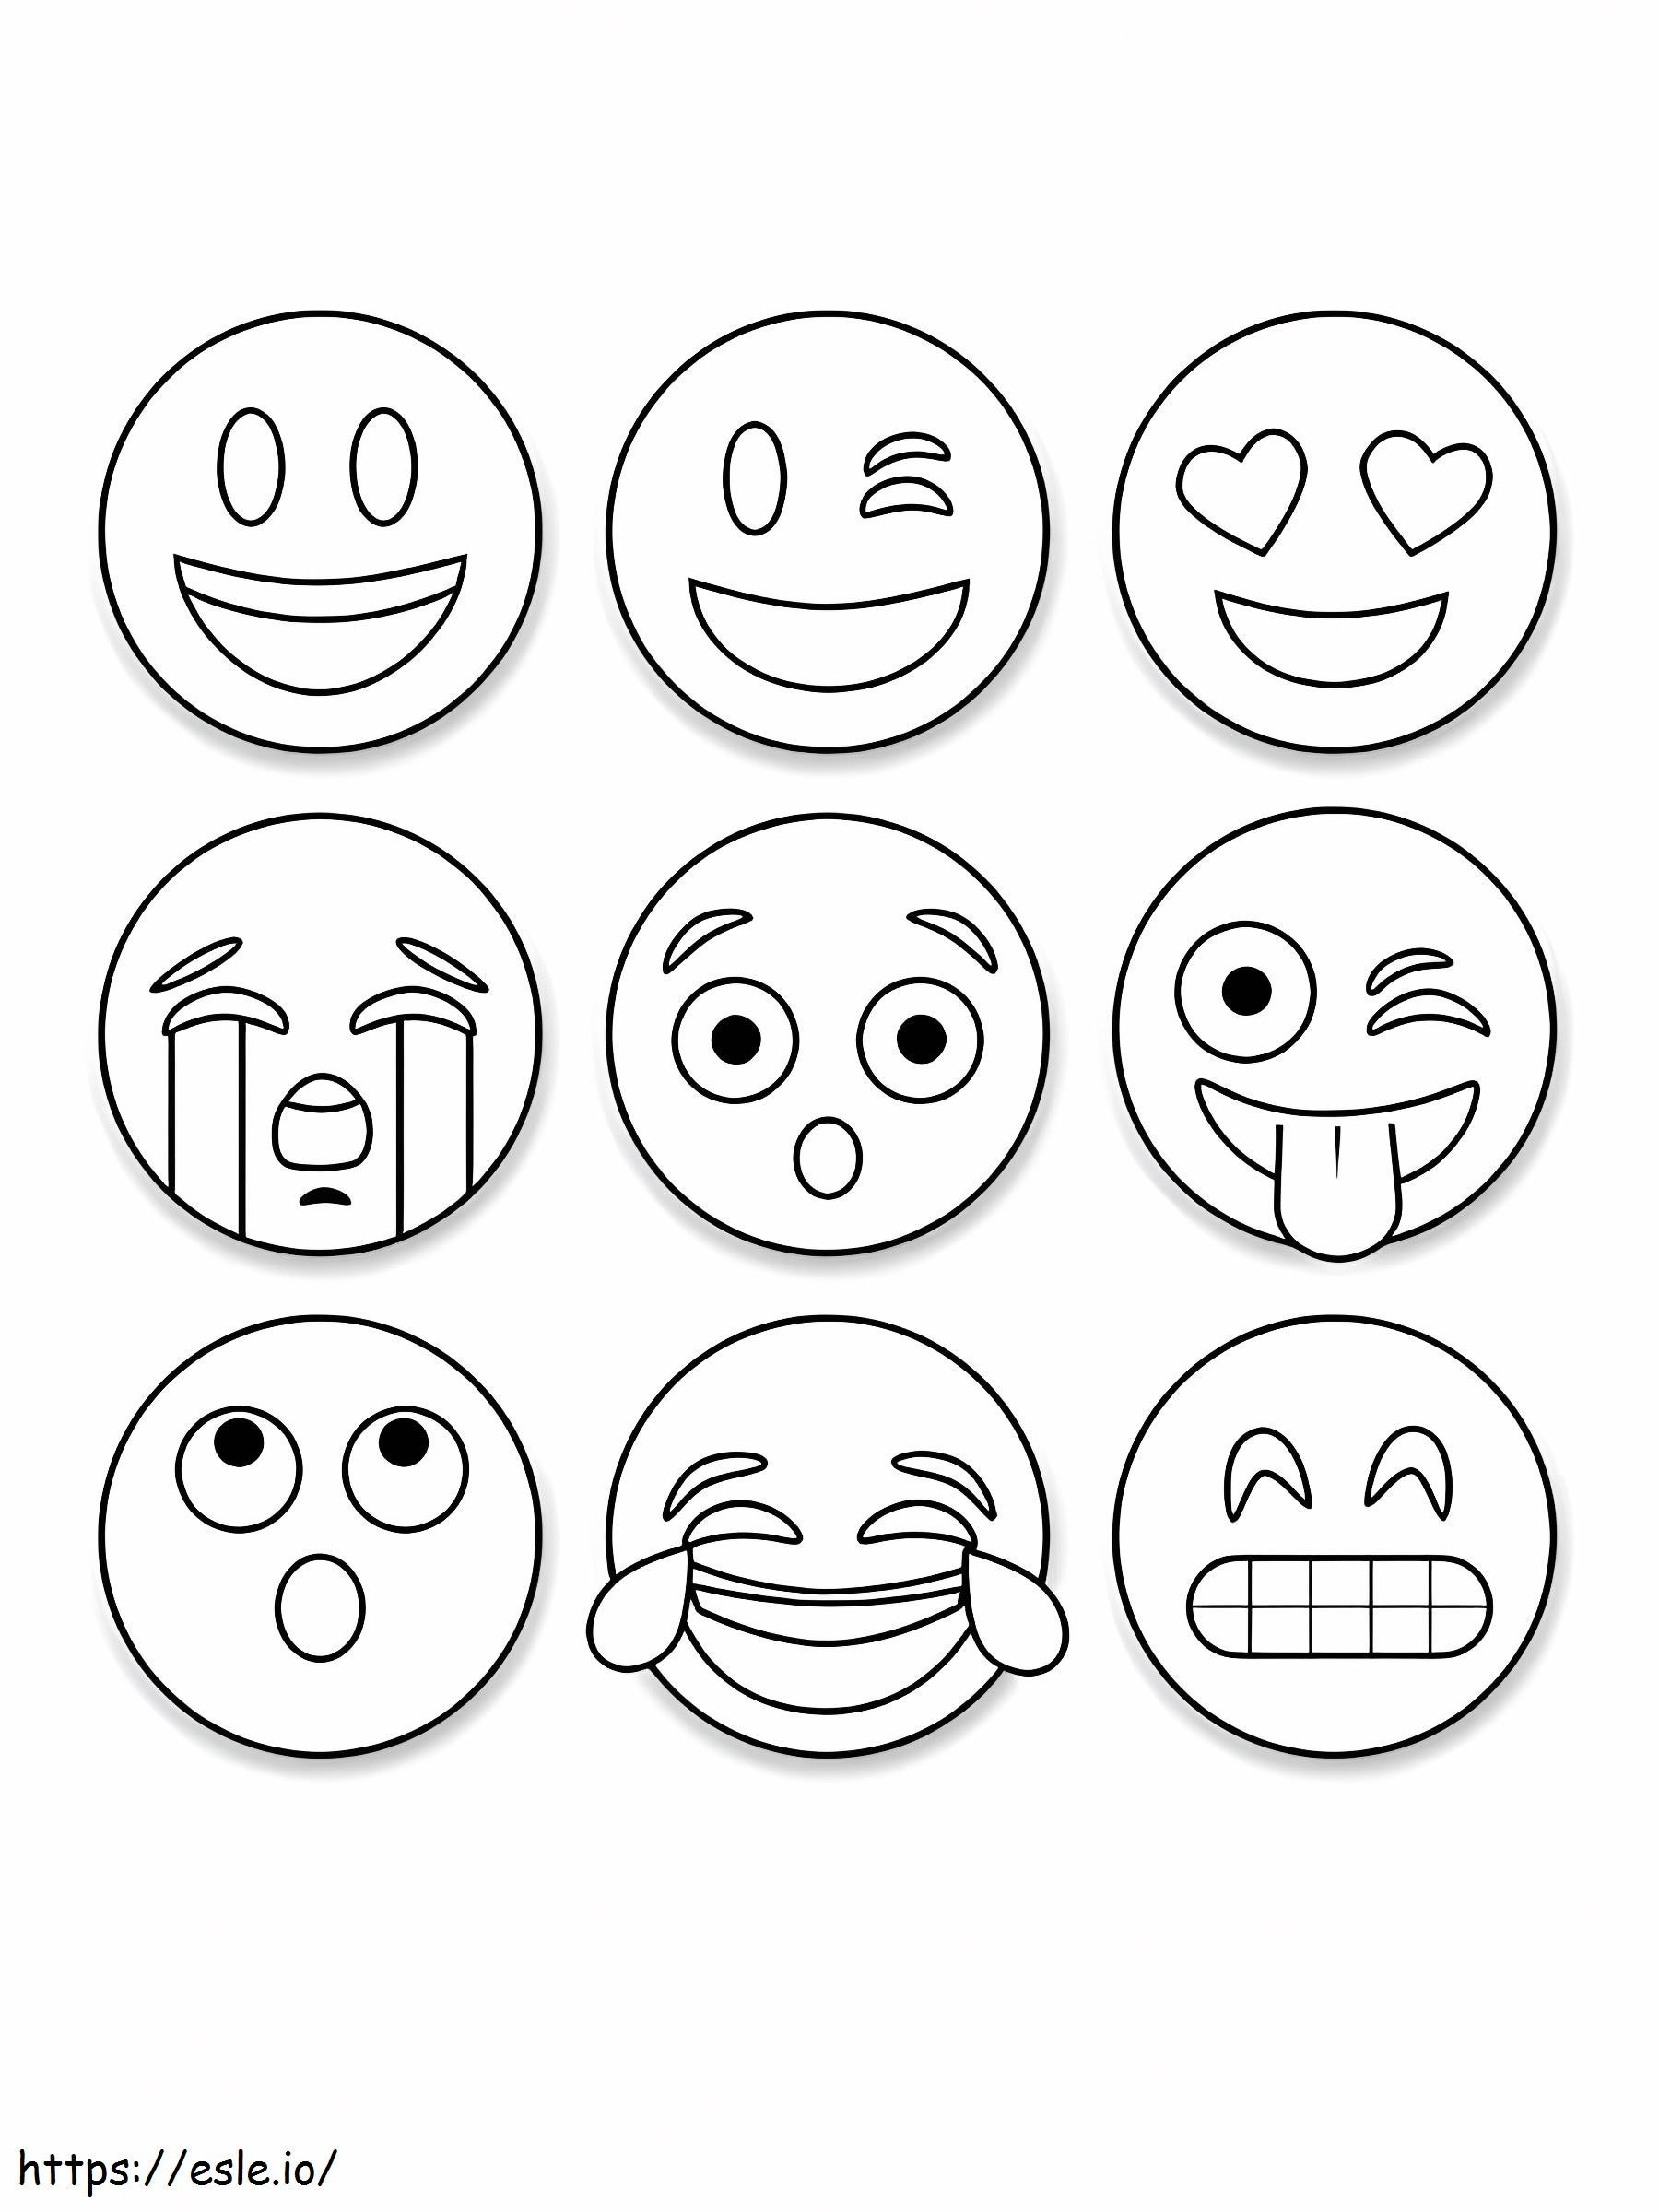 Neun Emoji ausmalbilder